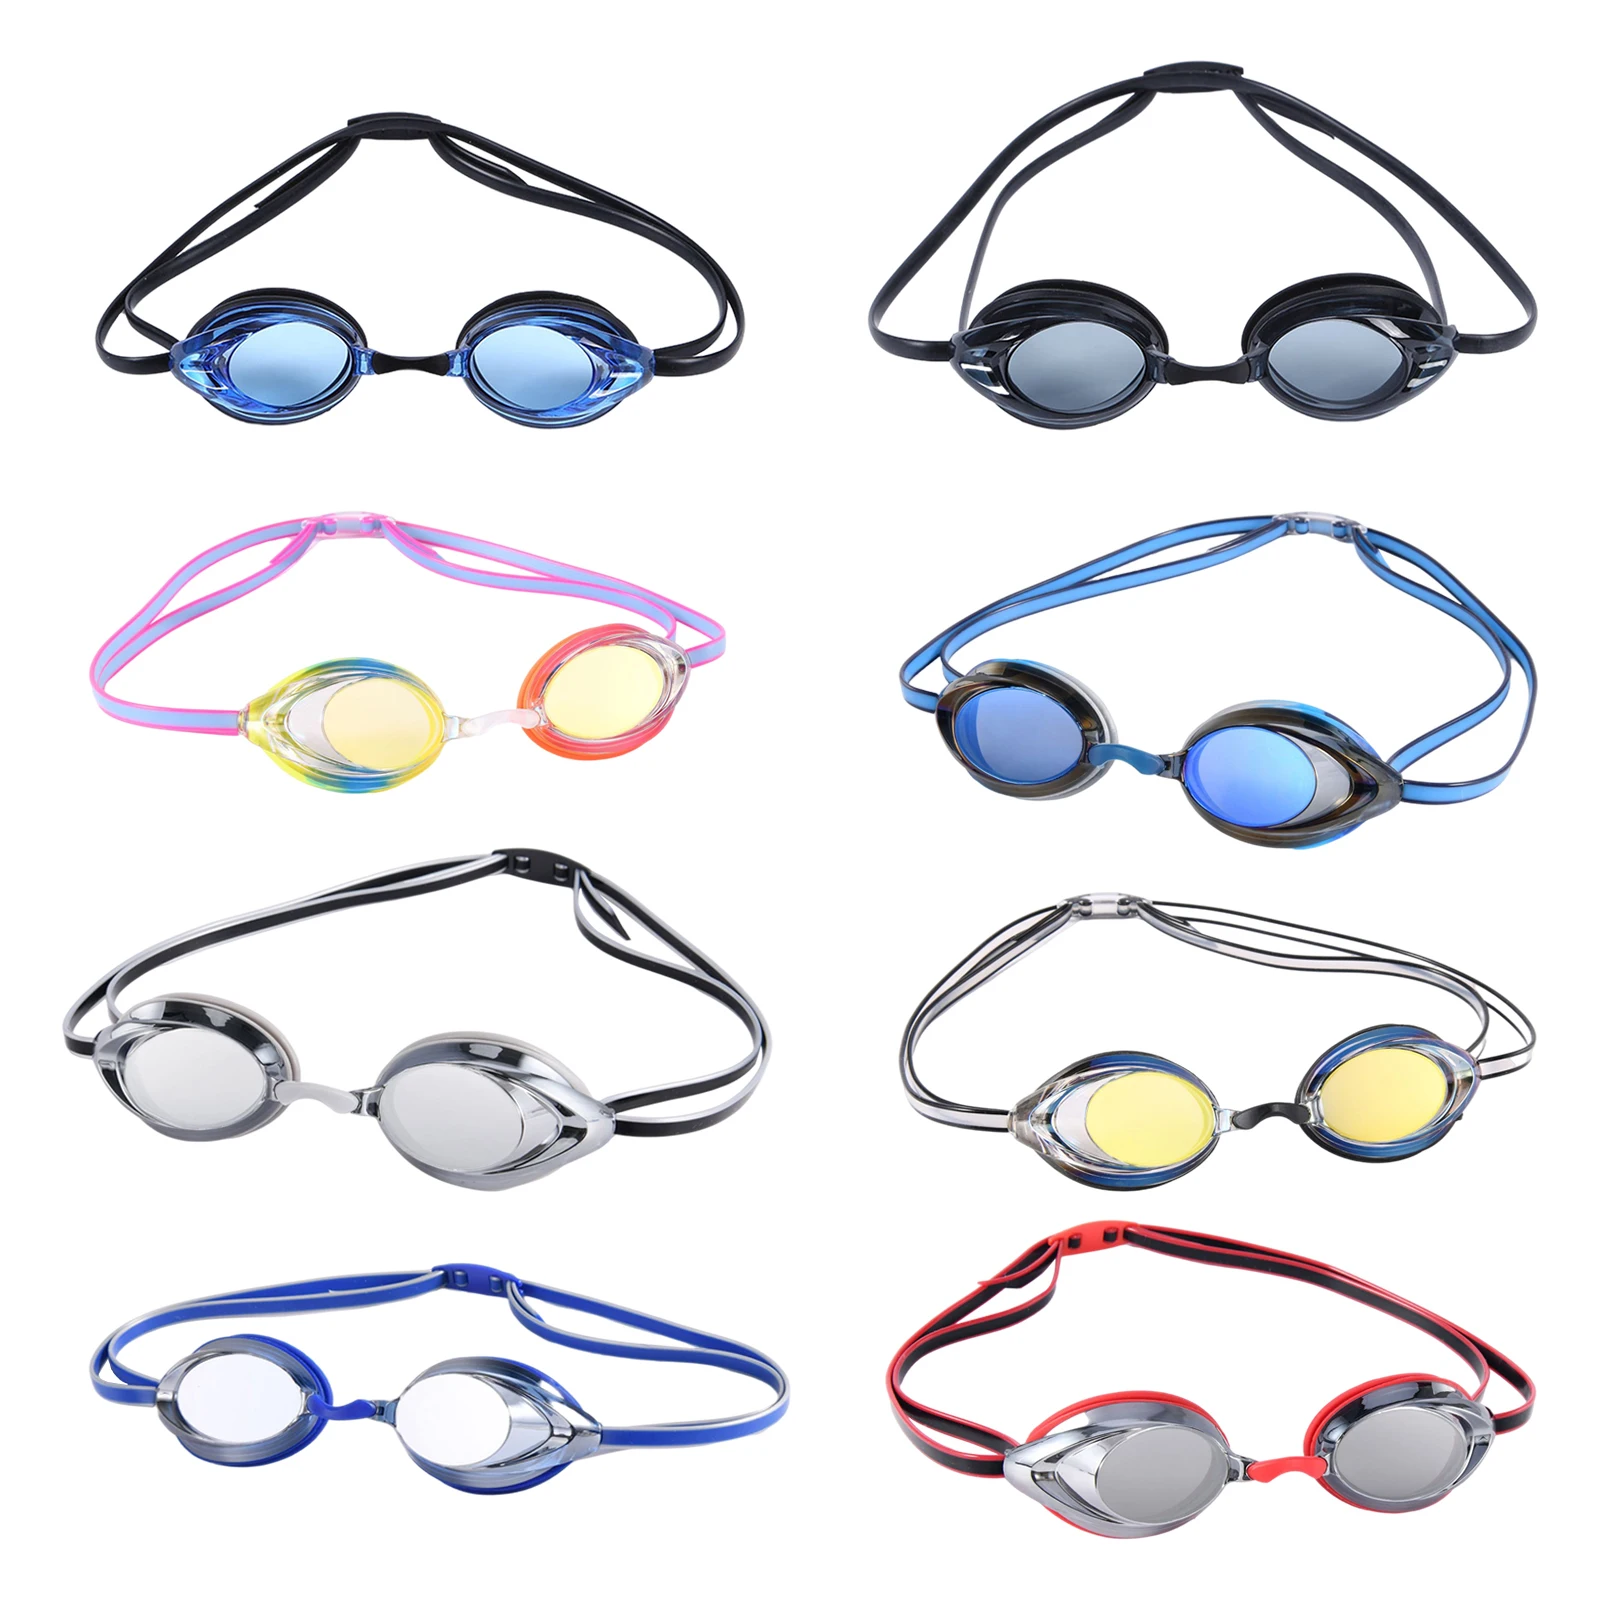 Water Glasses Professional Swimming Goggles Adults Waterproof Swim UV Protection Anti Fog Adjustable Glasses Water Sports Pool